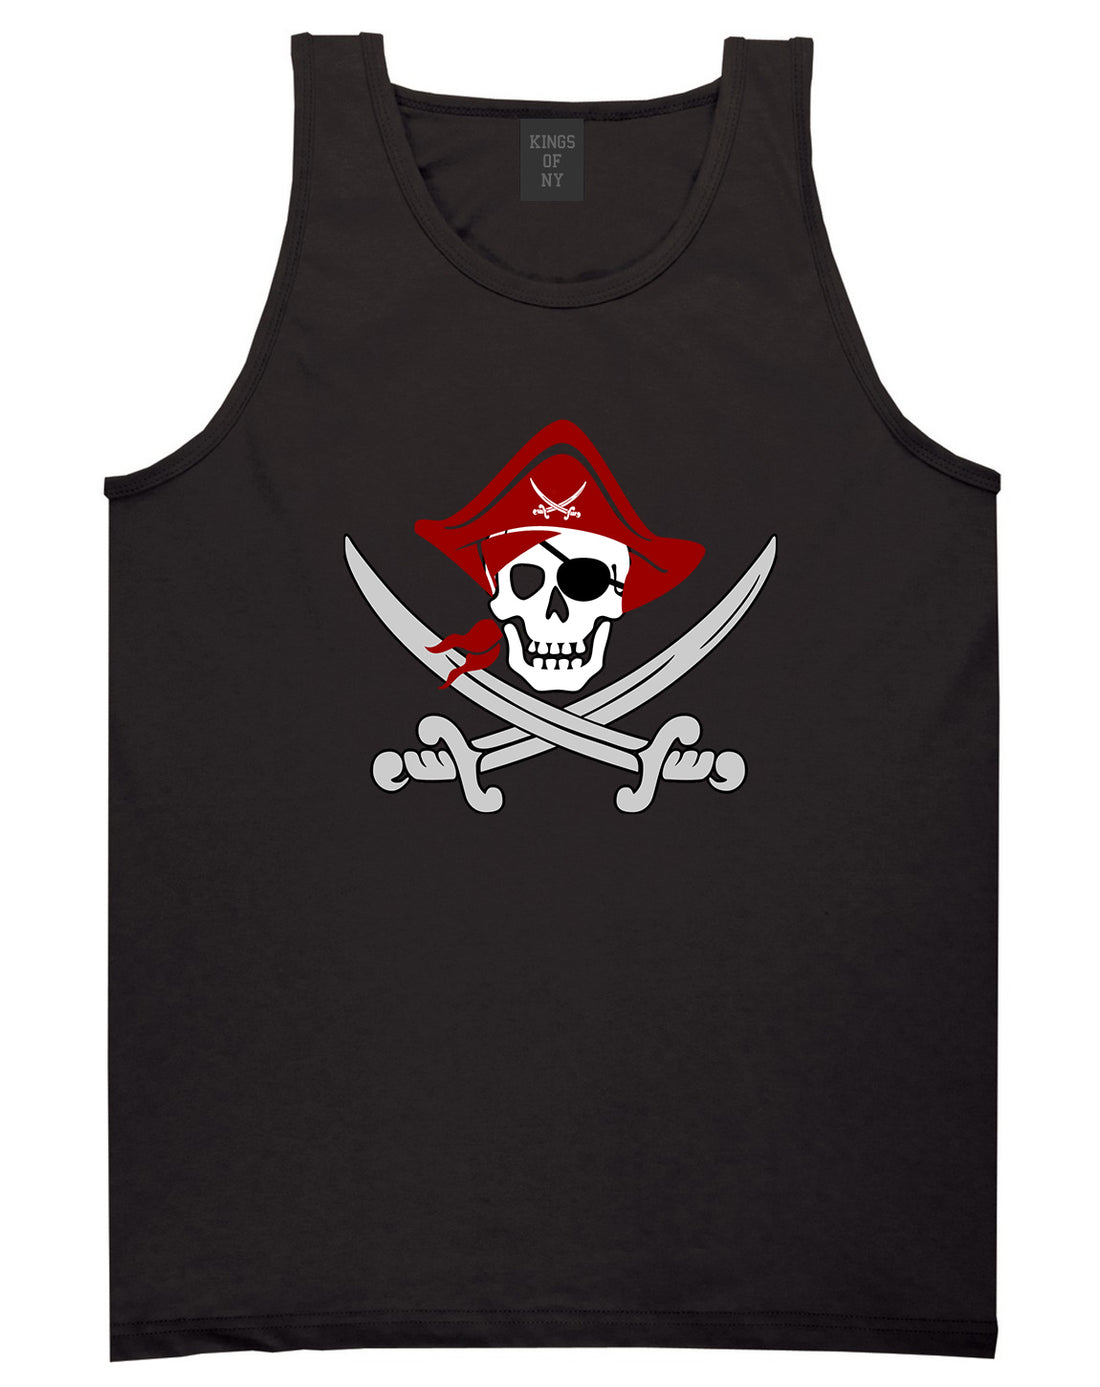 Pirate Captain And Swords Mens Tank Top Shirt Black